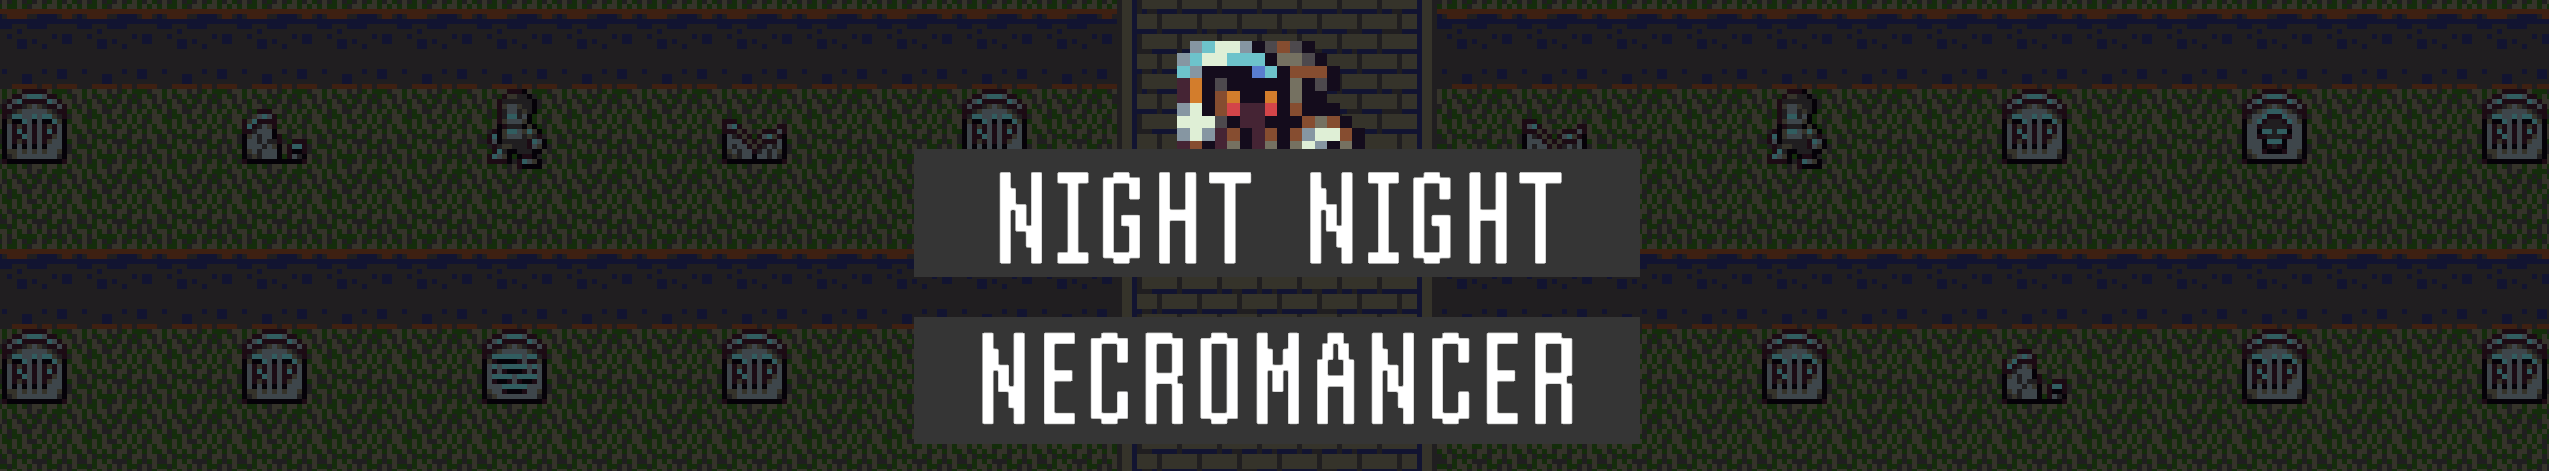 Night Night Necromancer